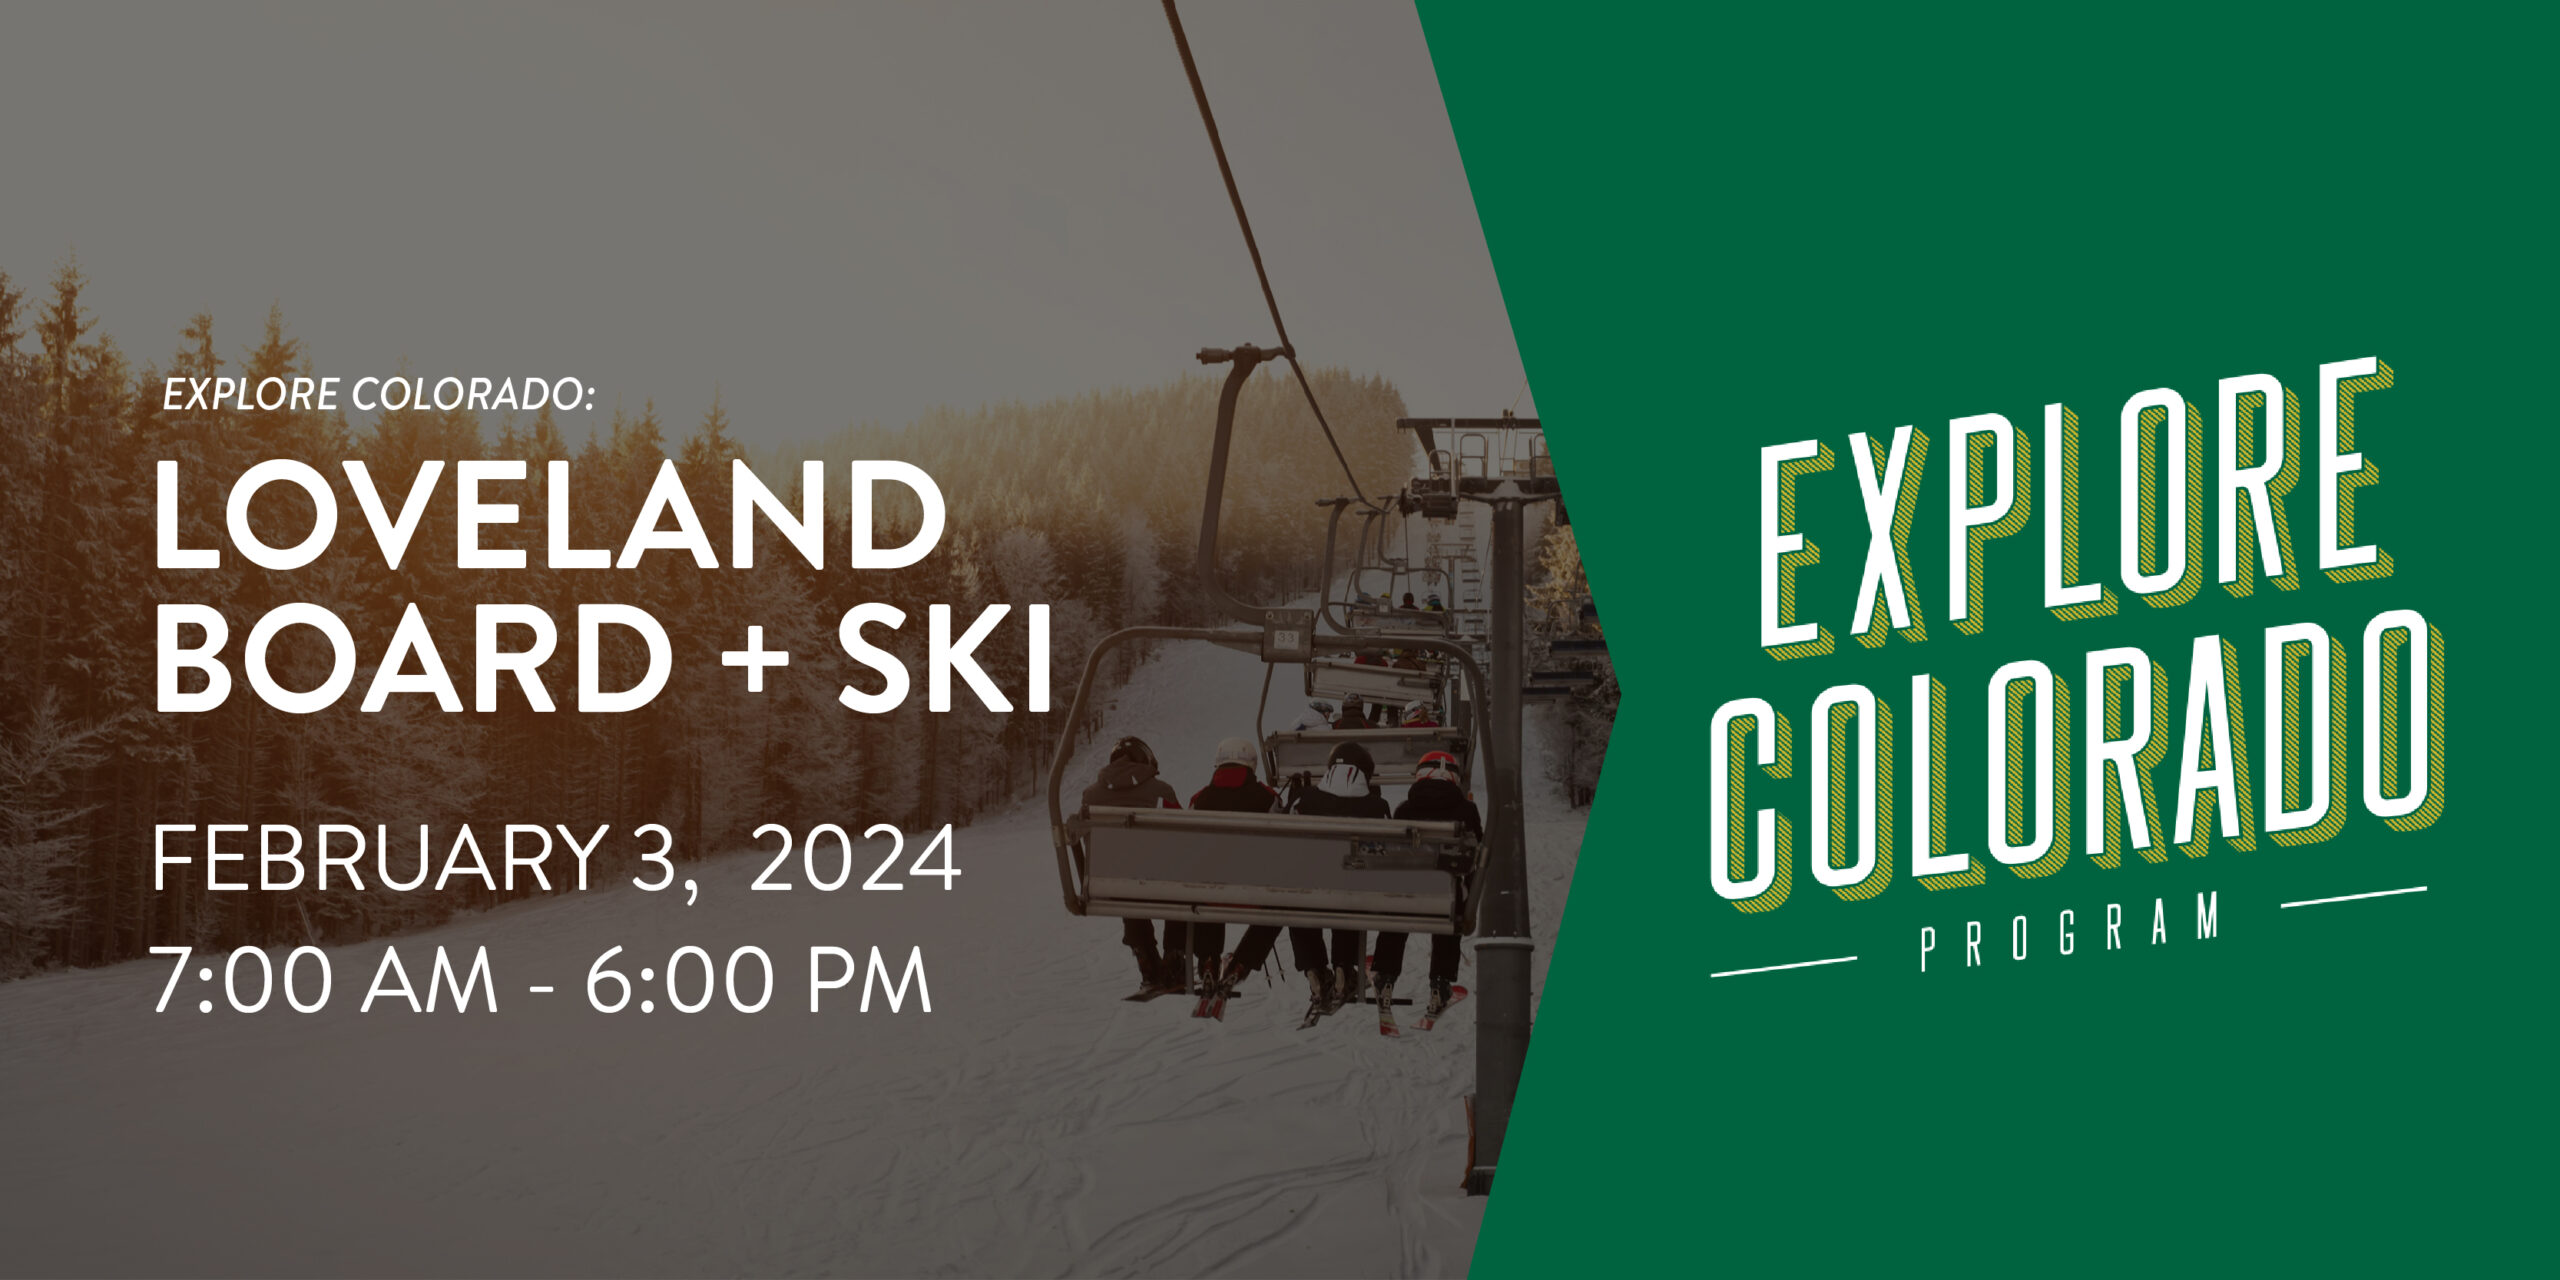 Explore Colorado: Ski + Board at Loveland Ski Area